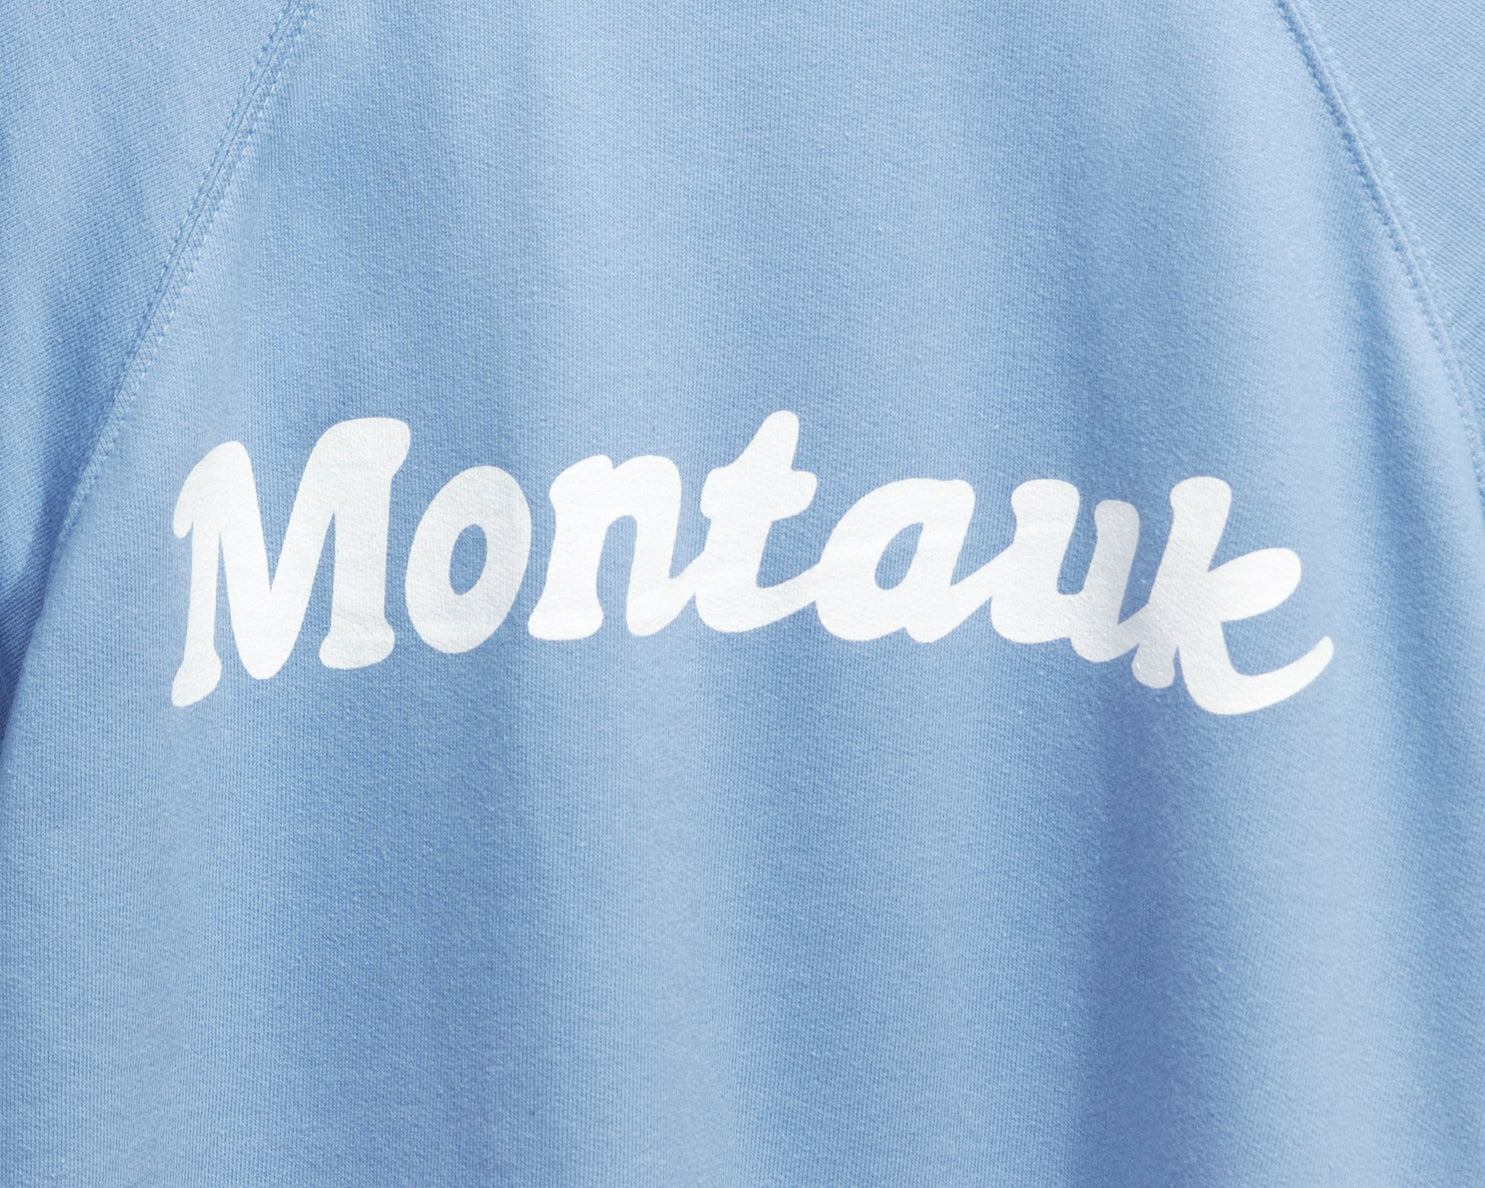 Montauk Clothing